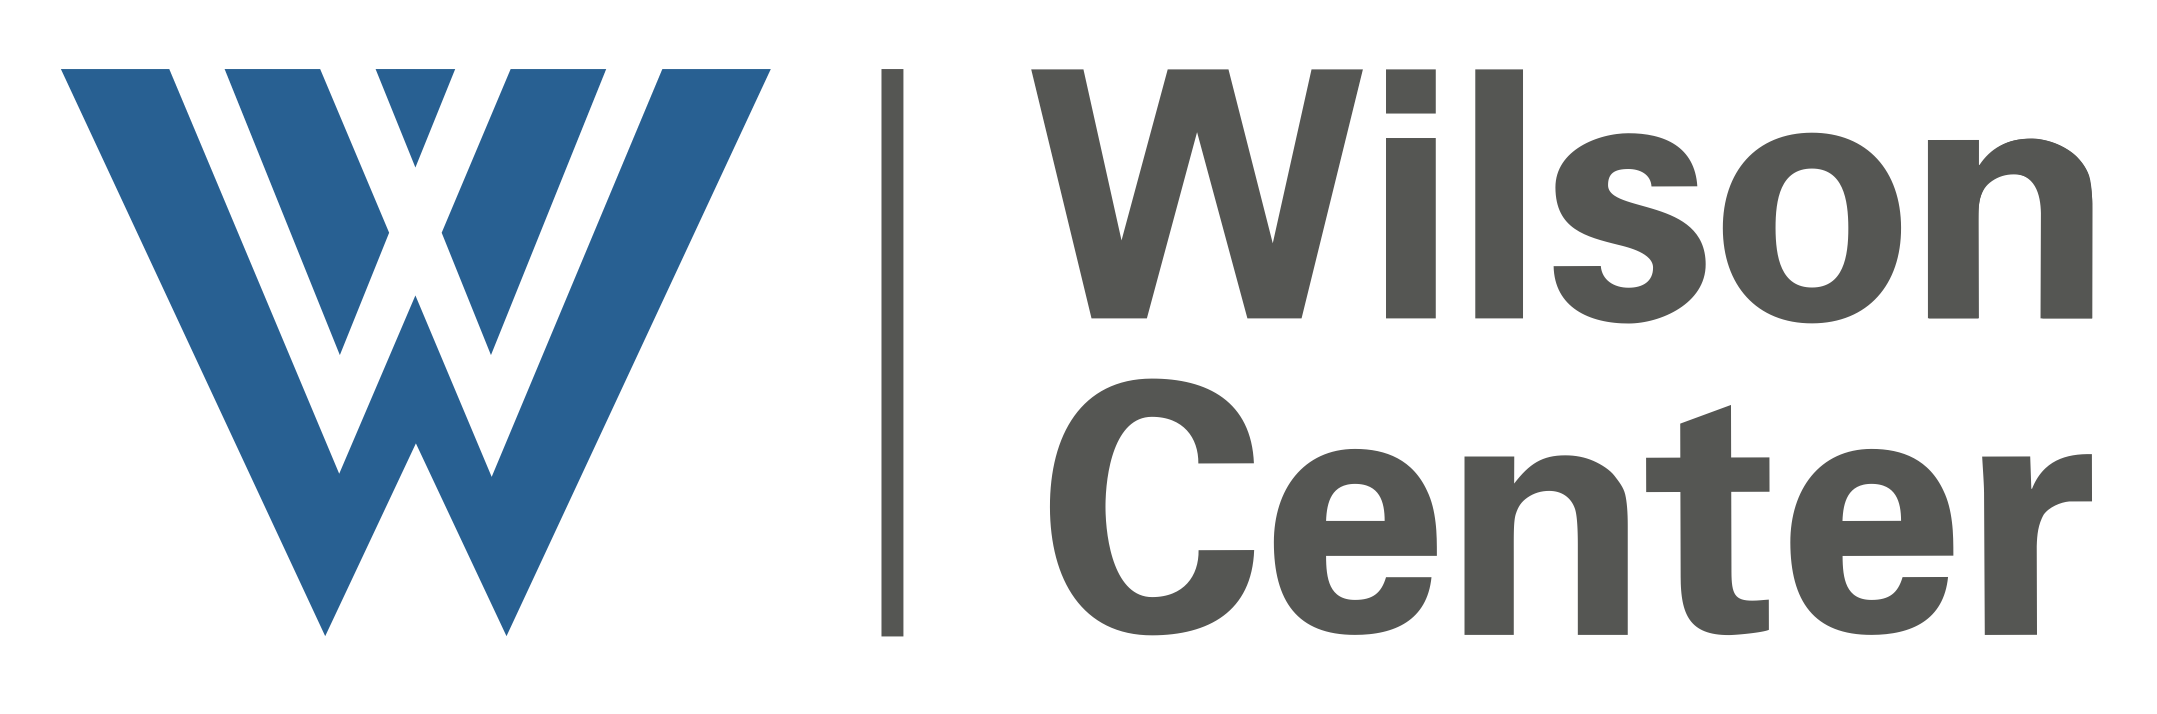 The Wilson Center